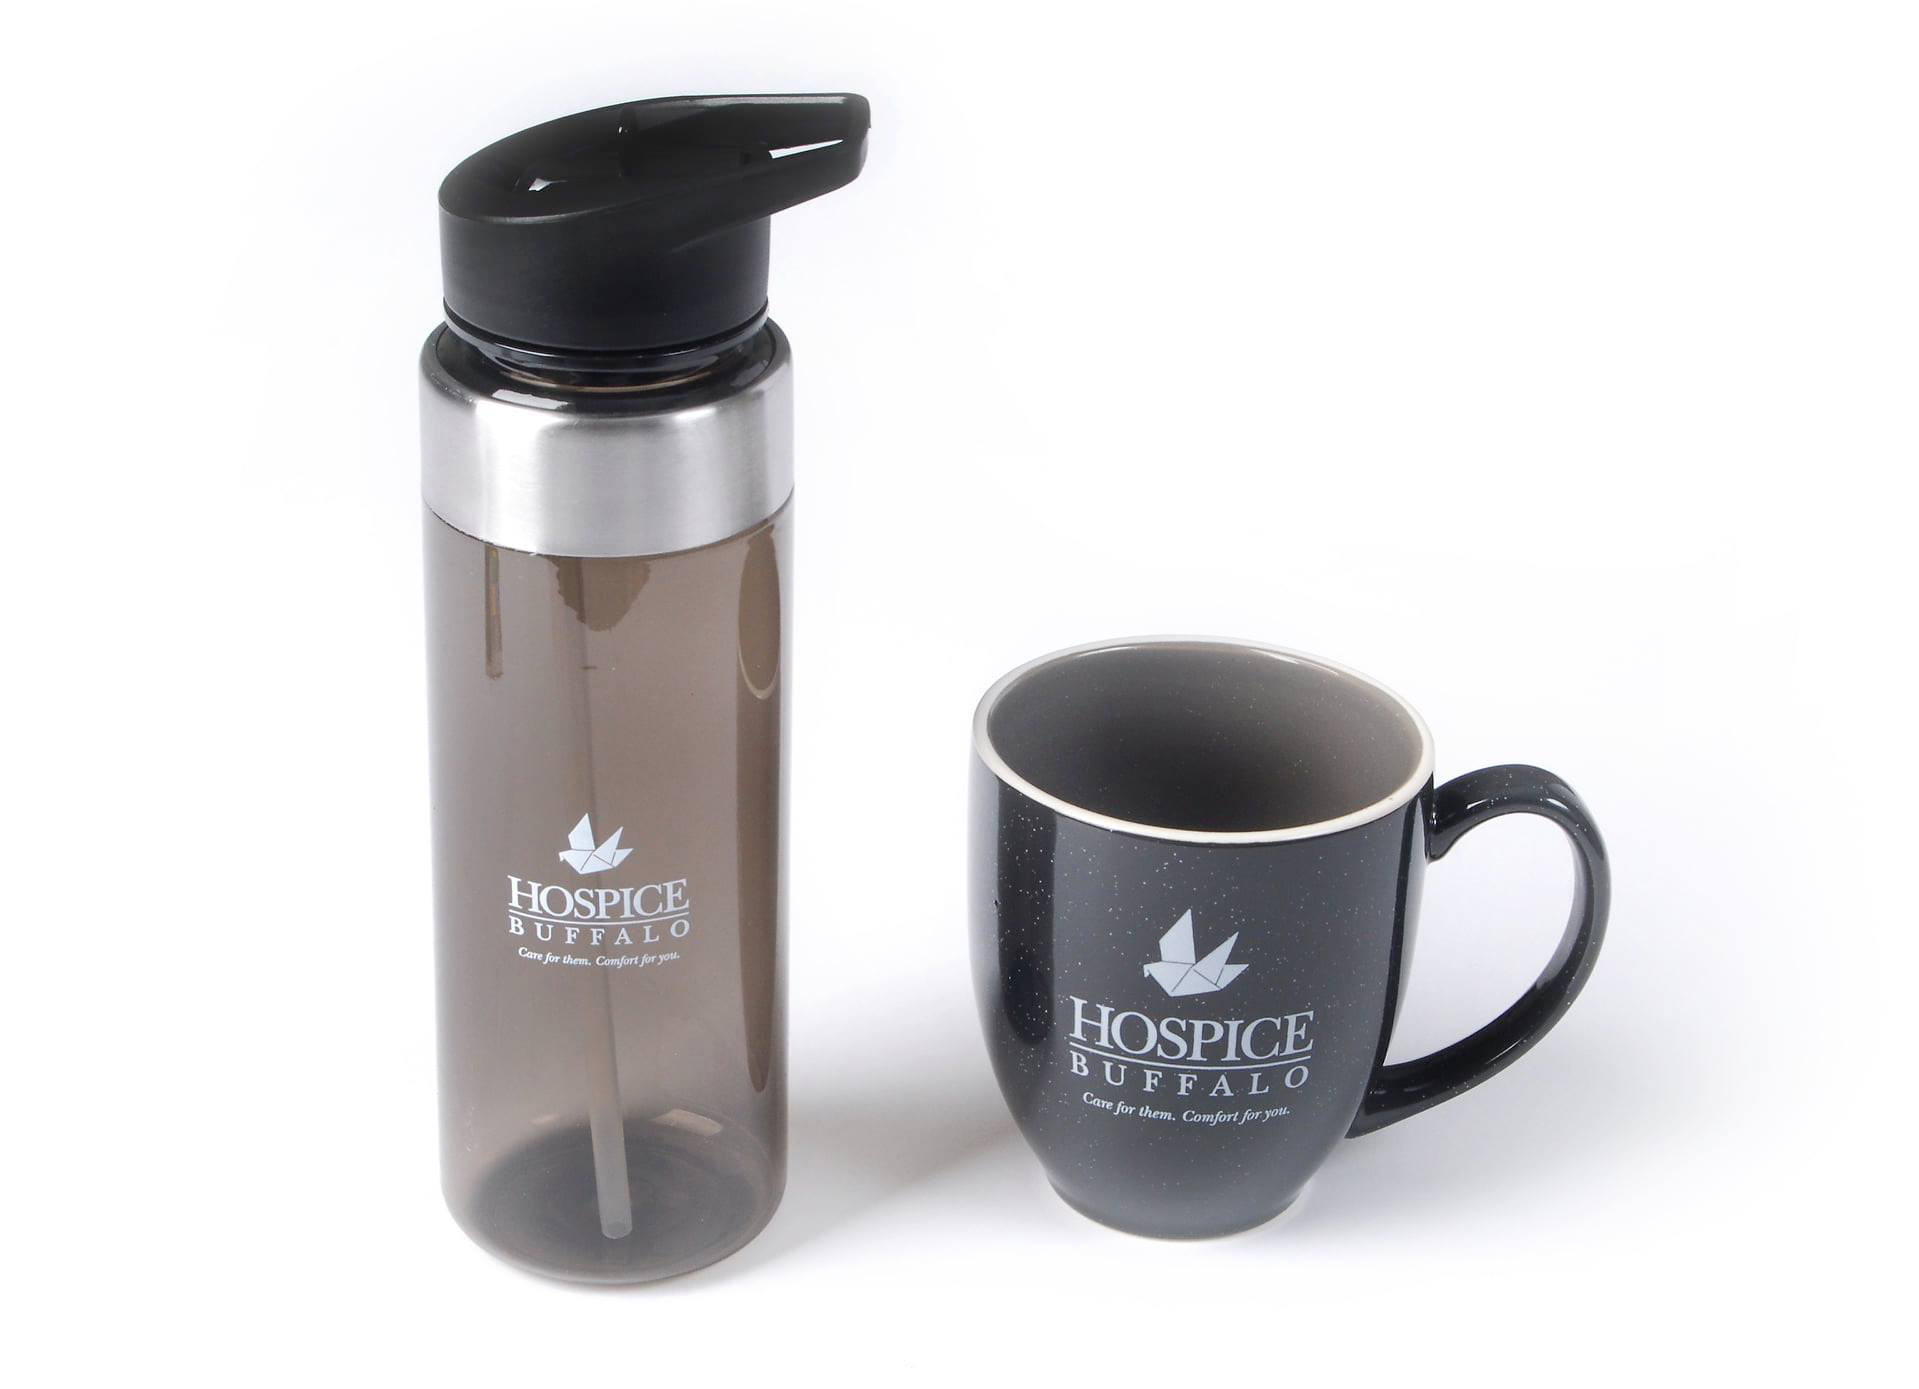 Hospice Buffalo water bottle and mug merch